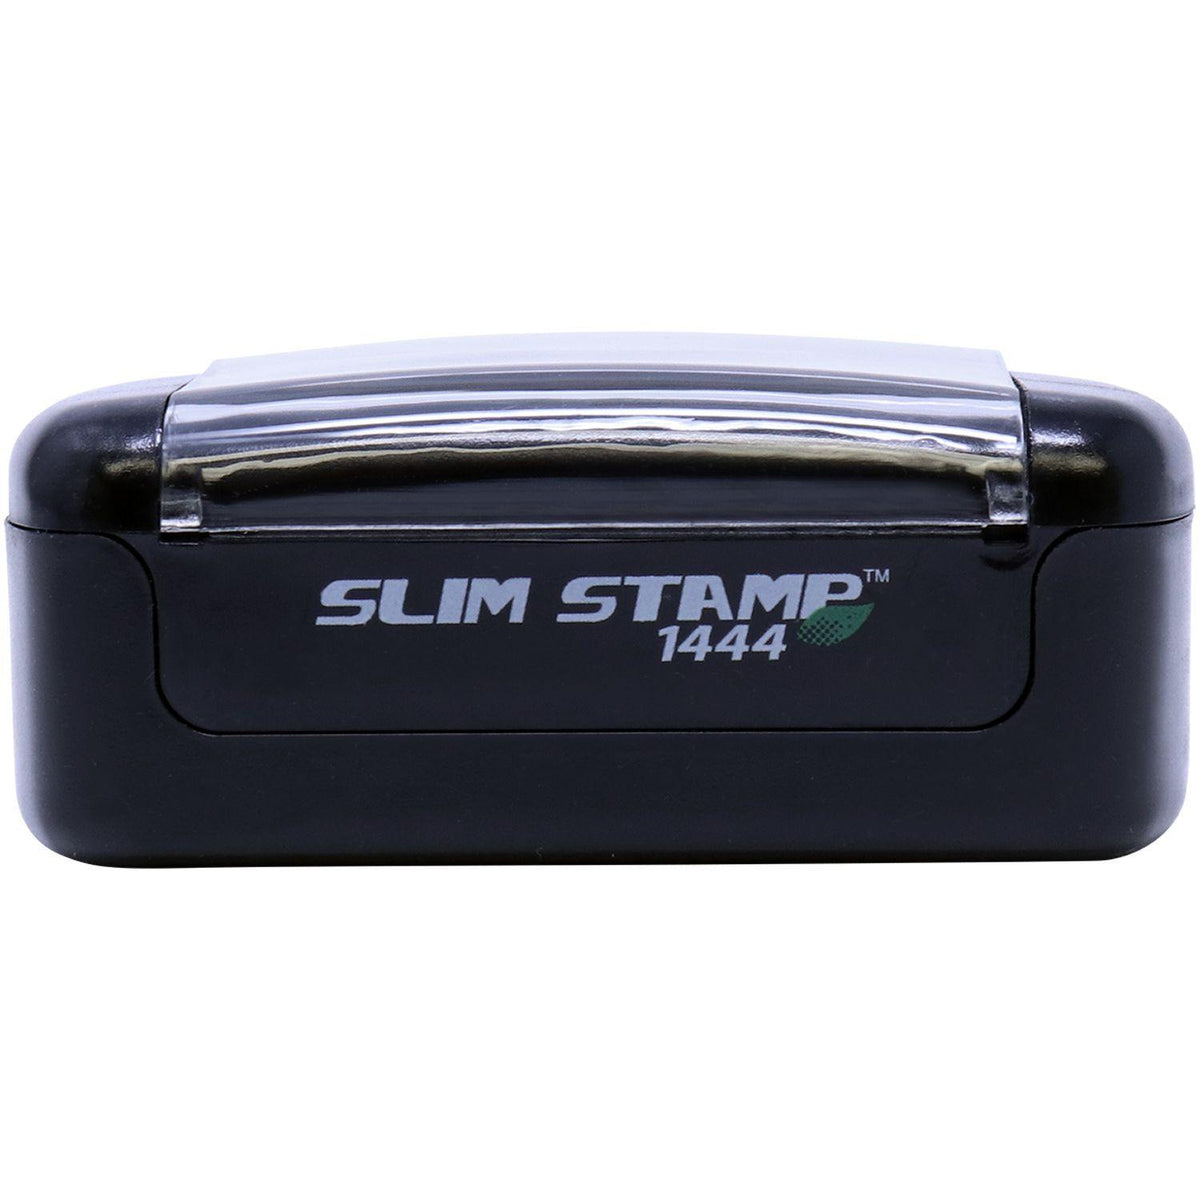 Alt View of Slim Pre-Inked Expres Entrega Inmedia Stamp Front View